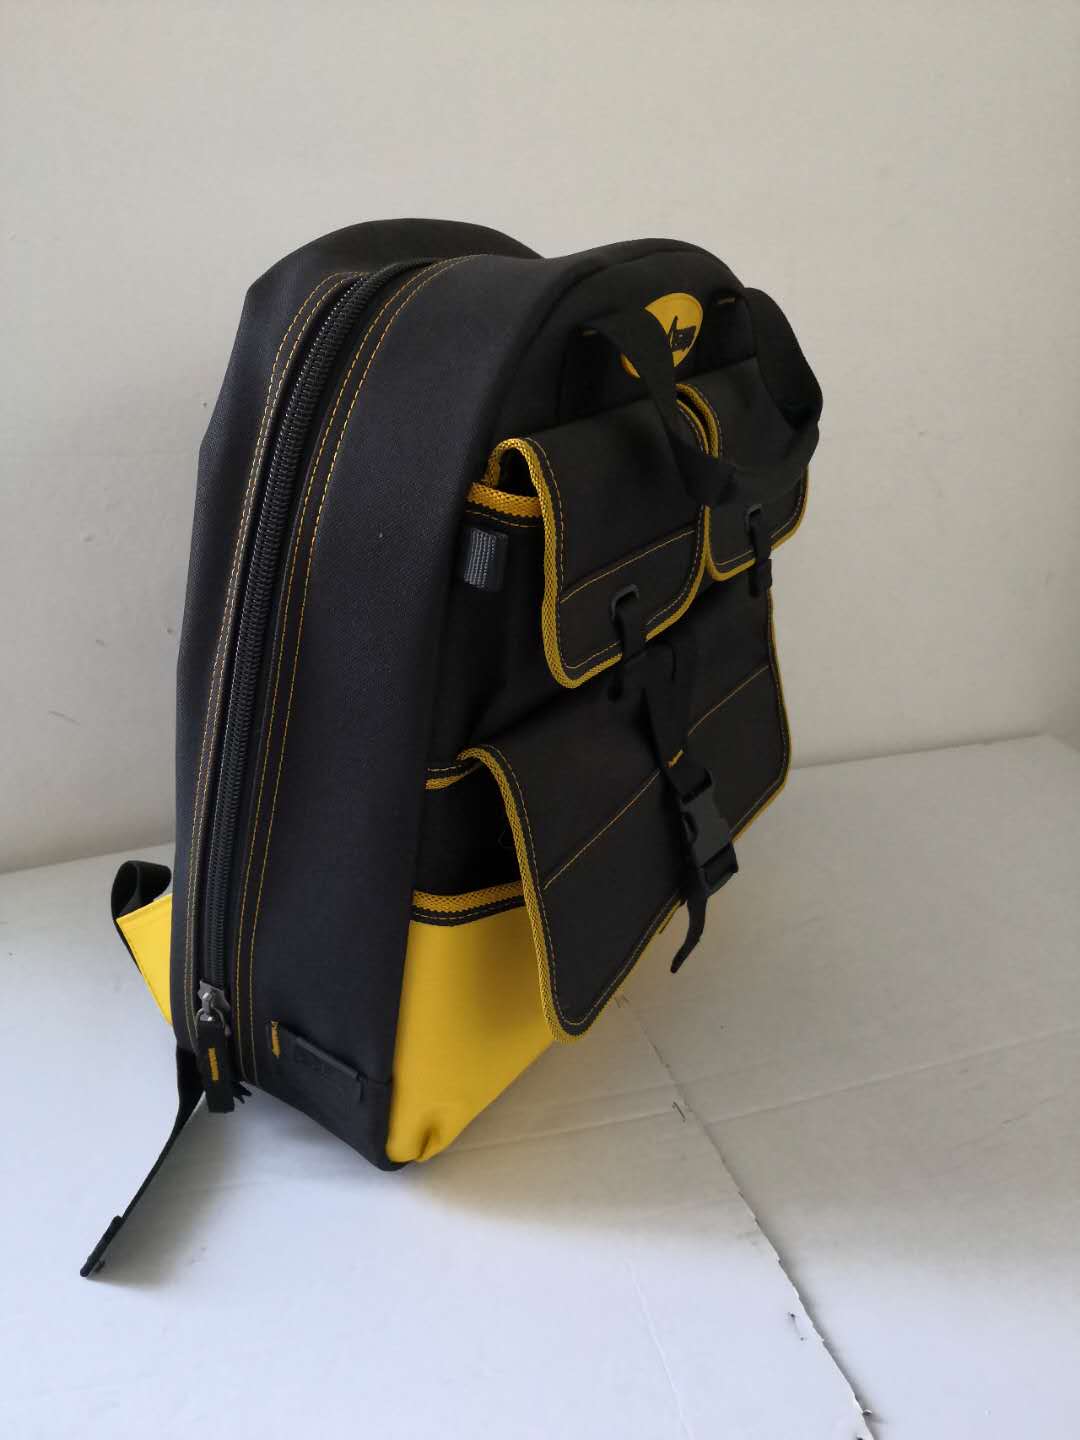 Lzdrason New leather tool belt pouches Ergonomic design for work